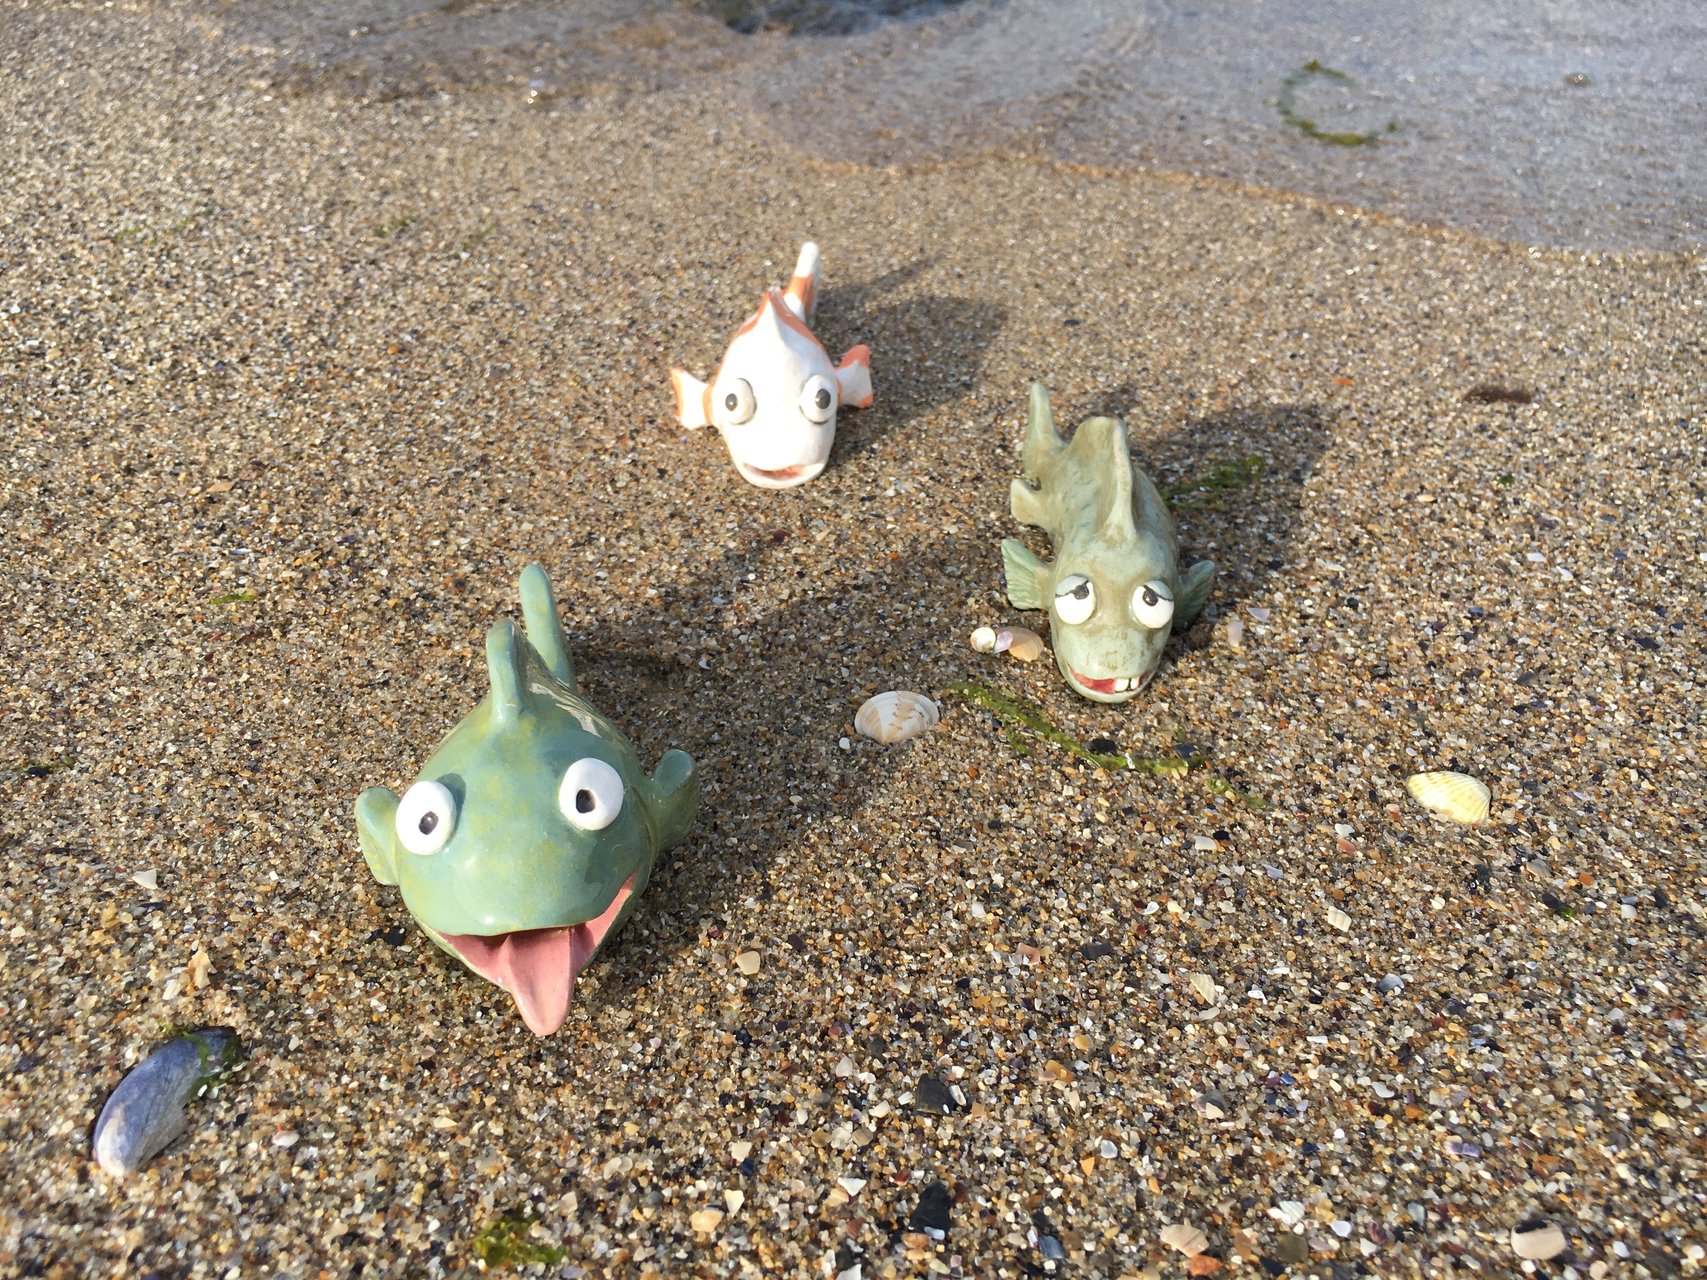 Ceramic fish figurine smiling, length - 12.5 cm, height - 6 cm, photo 5 of 6.